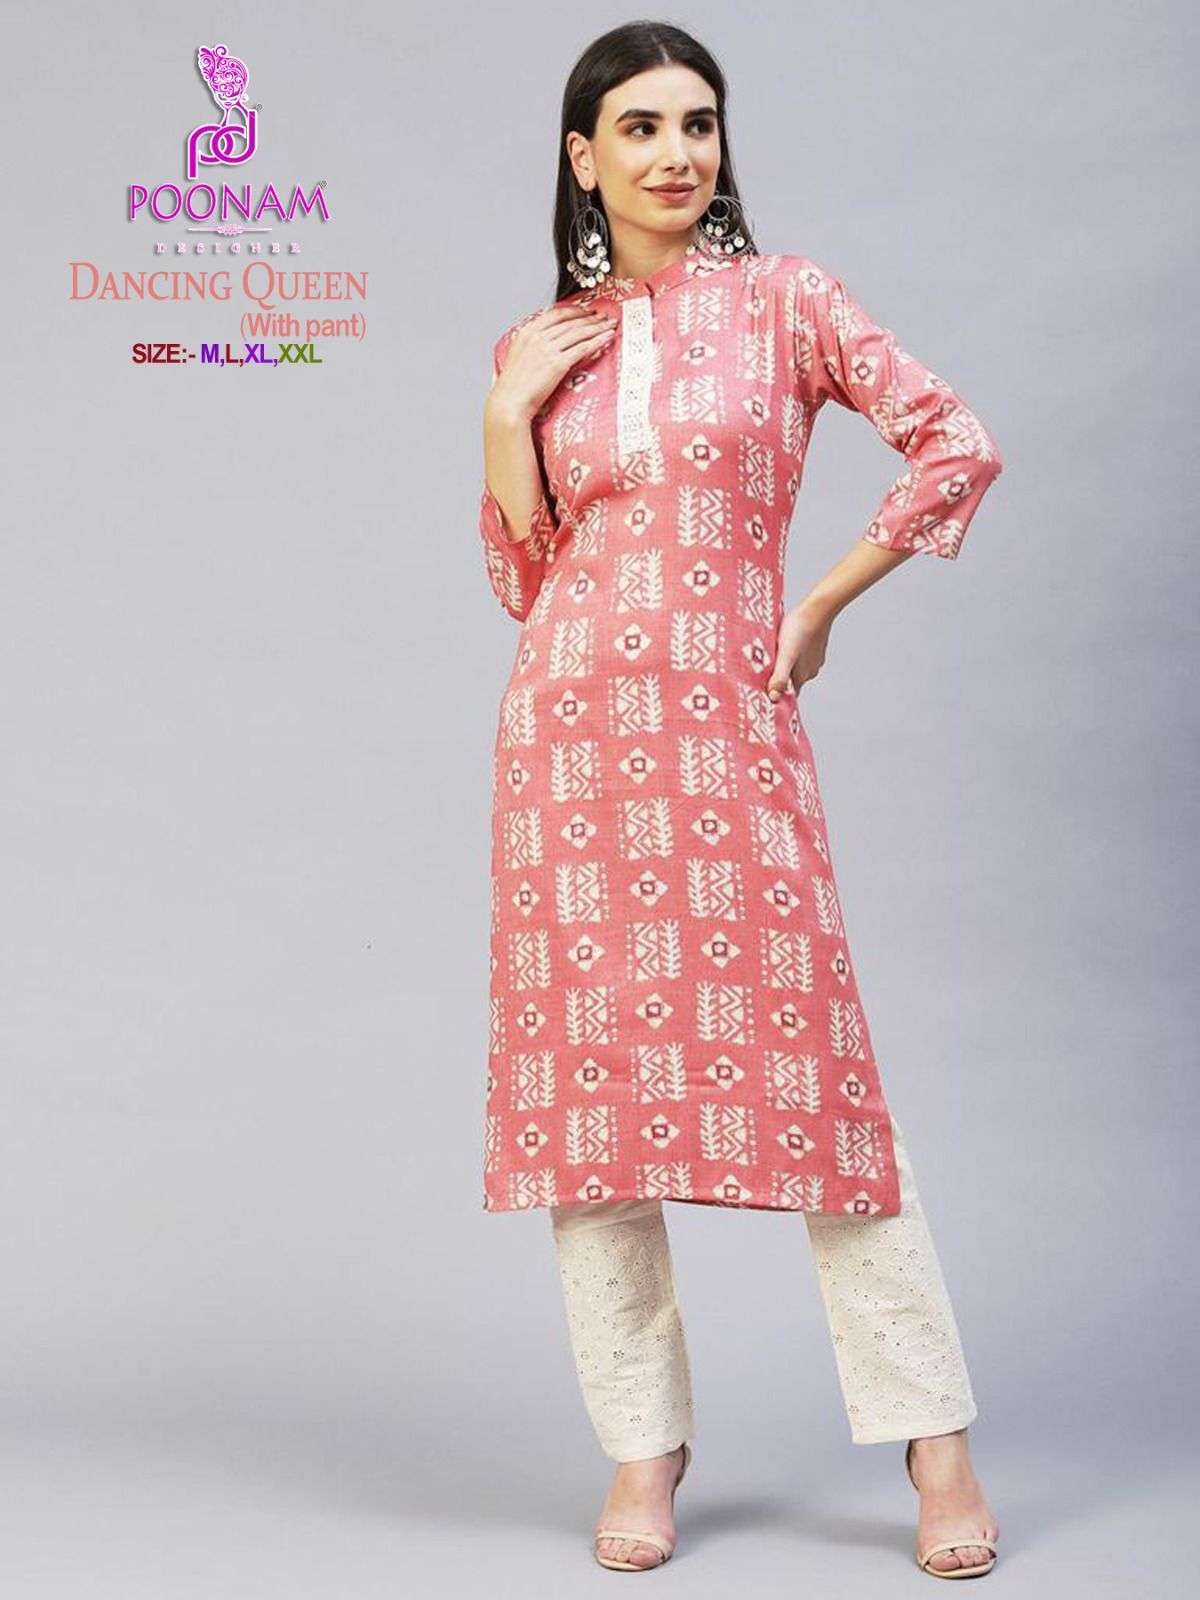 Poonam designer cotton Kurtis queen at Rs 450 | Tail Cut Kurti in Surat |  ID: 2853161574797